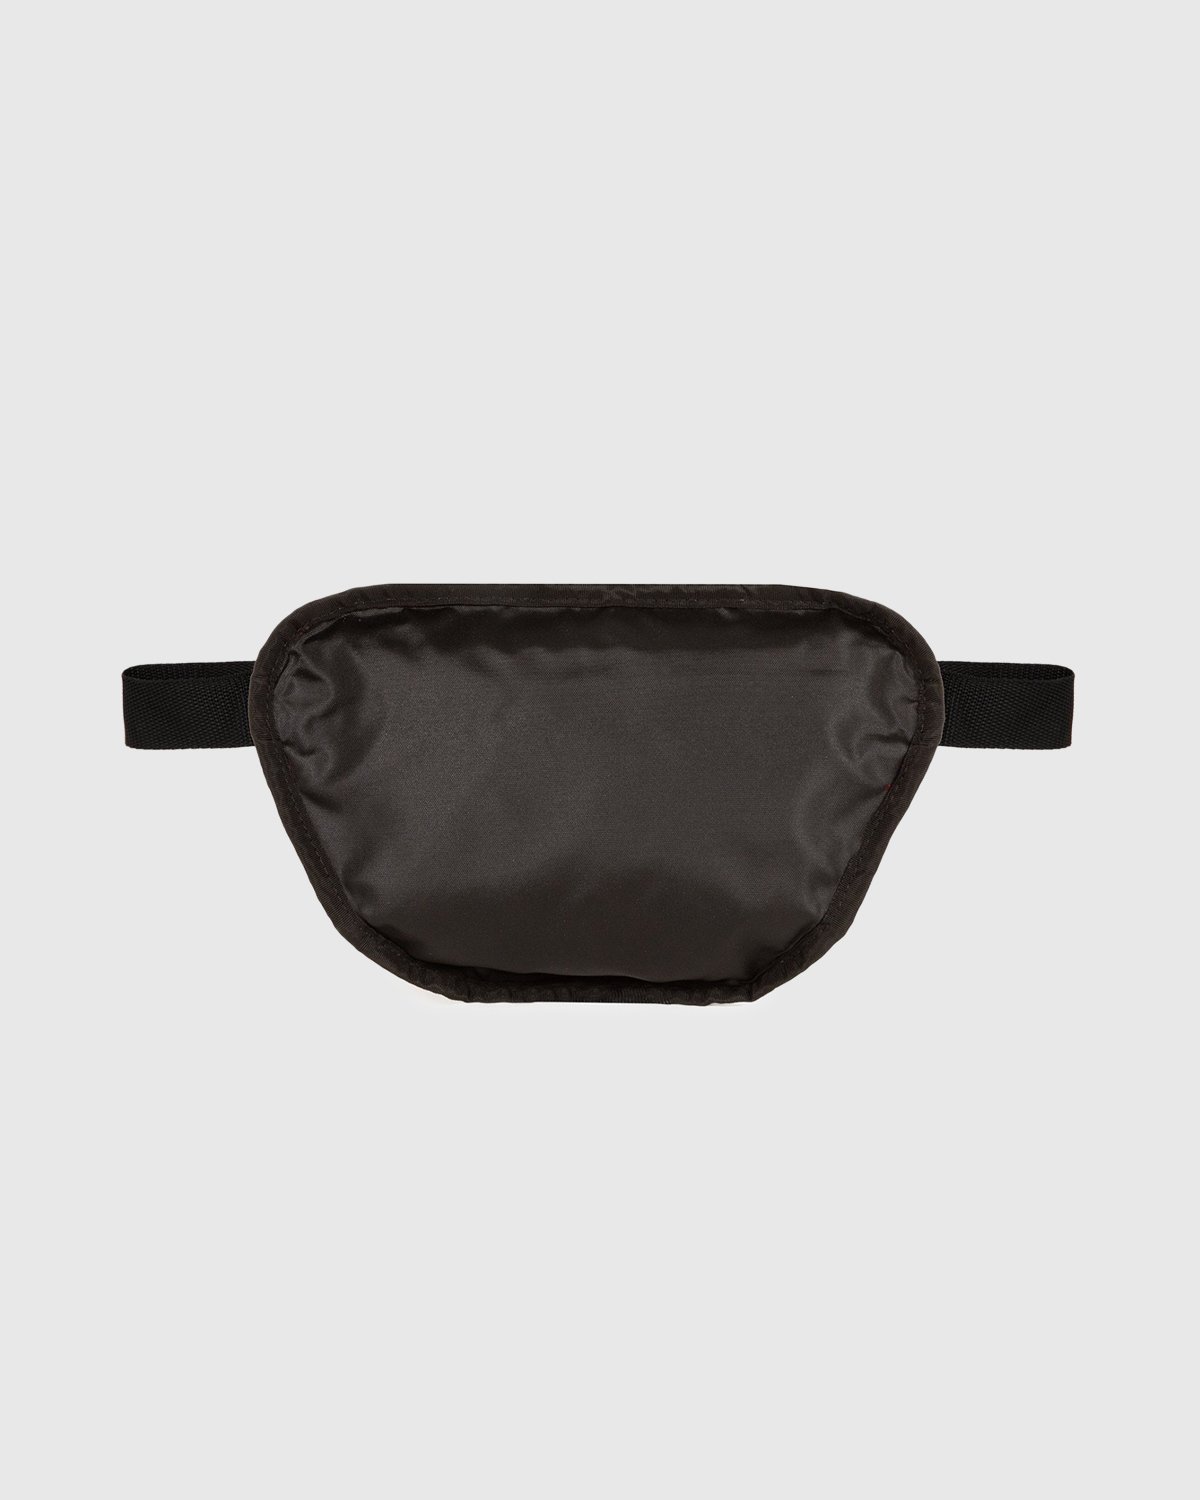 MM6 Maison Margiela x Eastpak - Belt Bag Black - Accessories - Black - Image 3